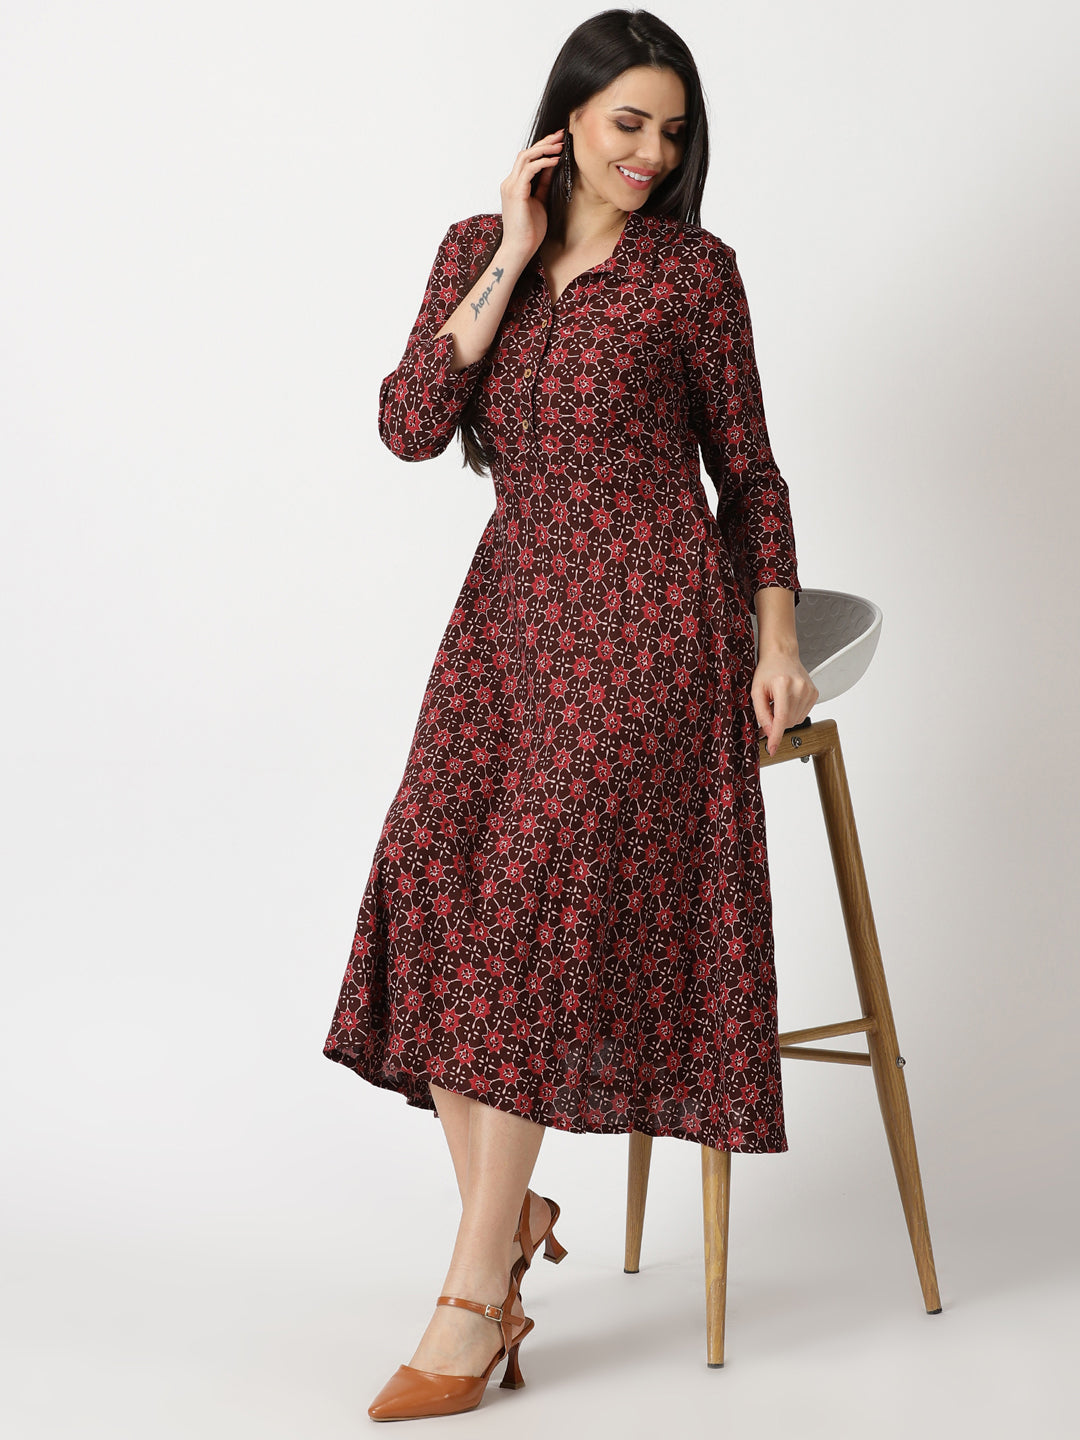 Buy cotton dresses online for women in India. – JISORA